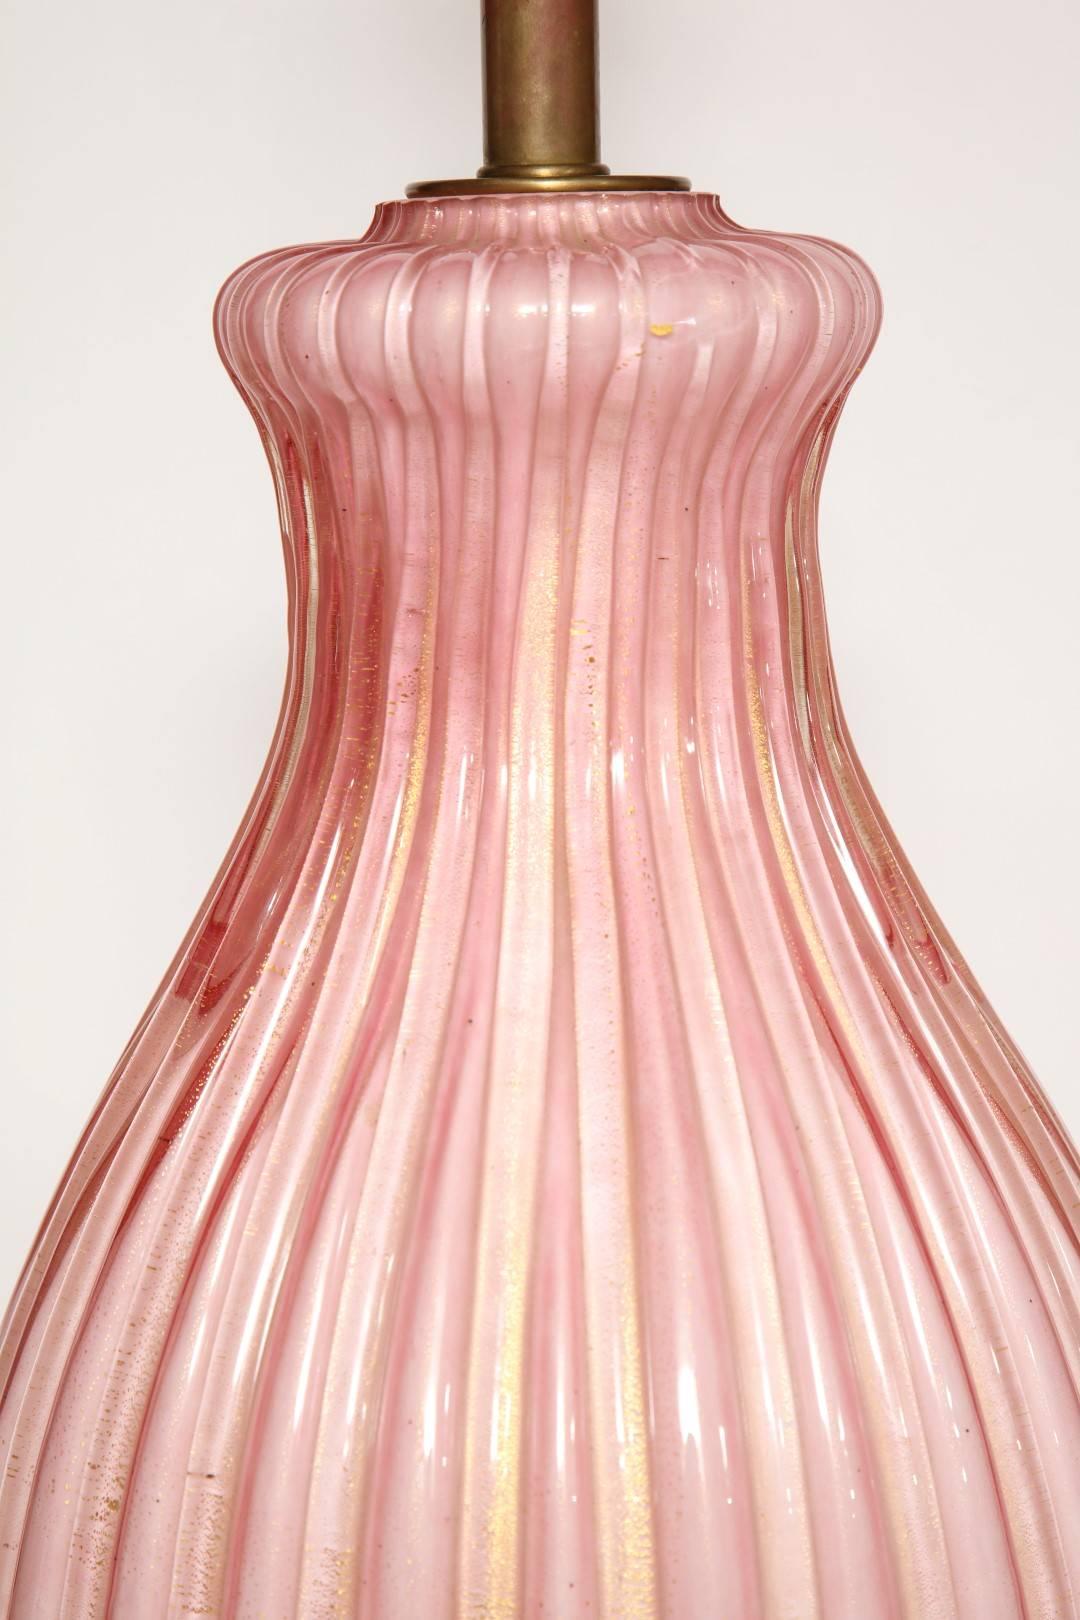 Pair of Italian Pink Murano Glass Table Lamps 1